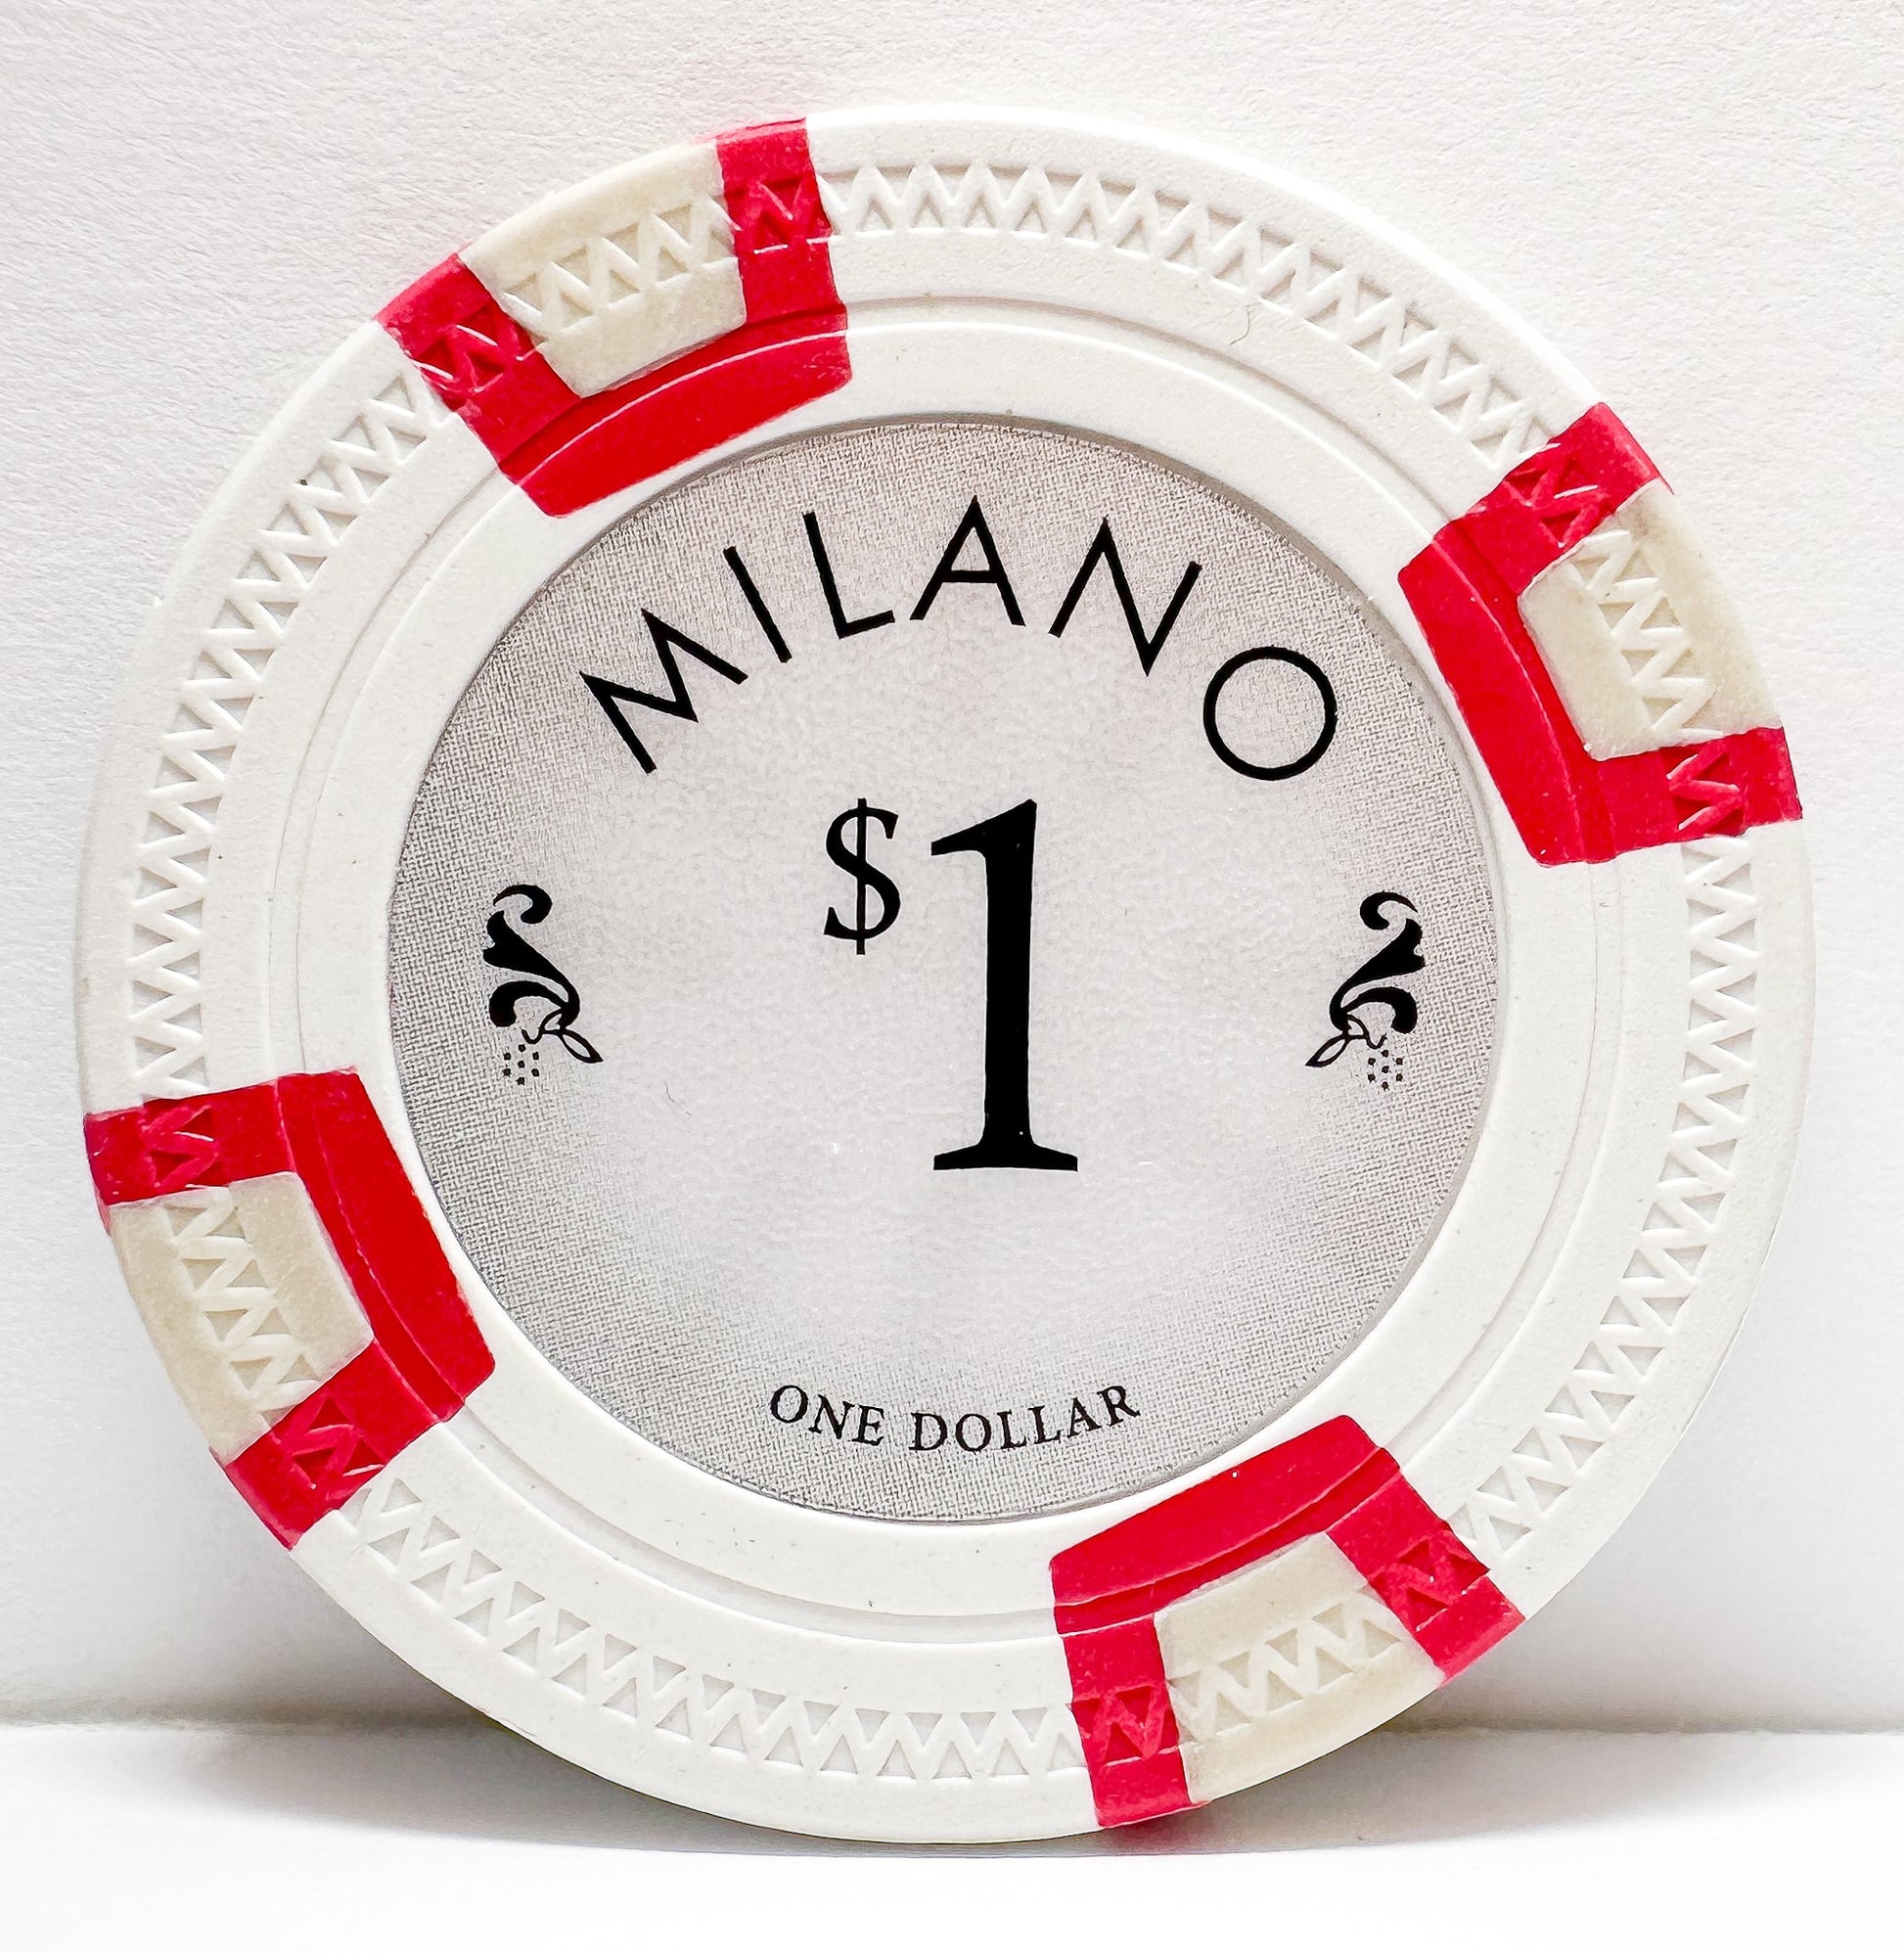 Milano 1 dollar Poker Chip